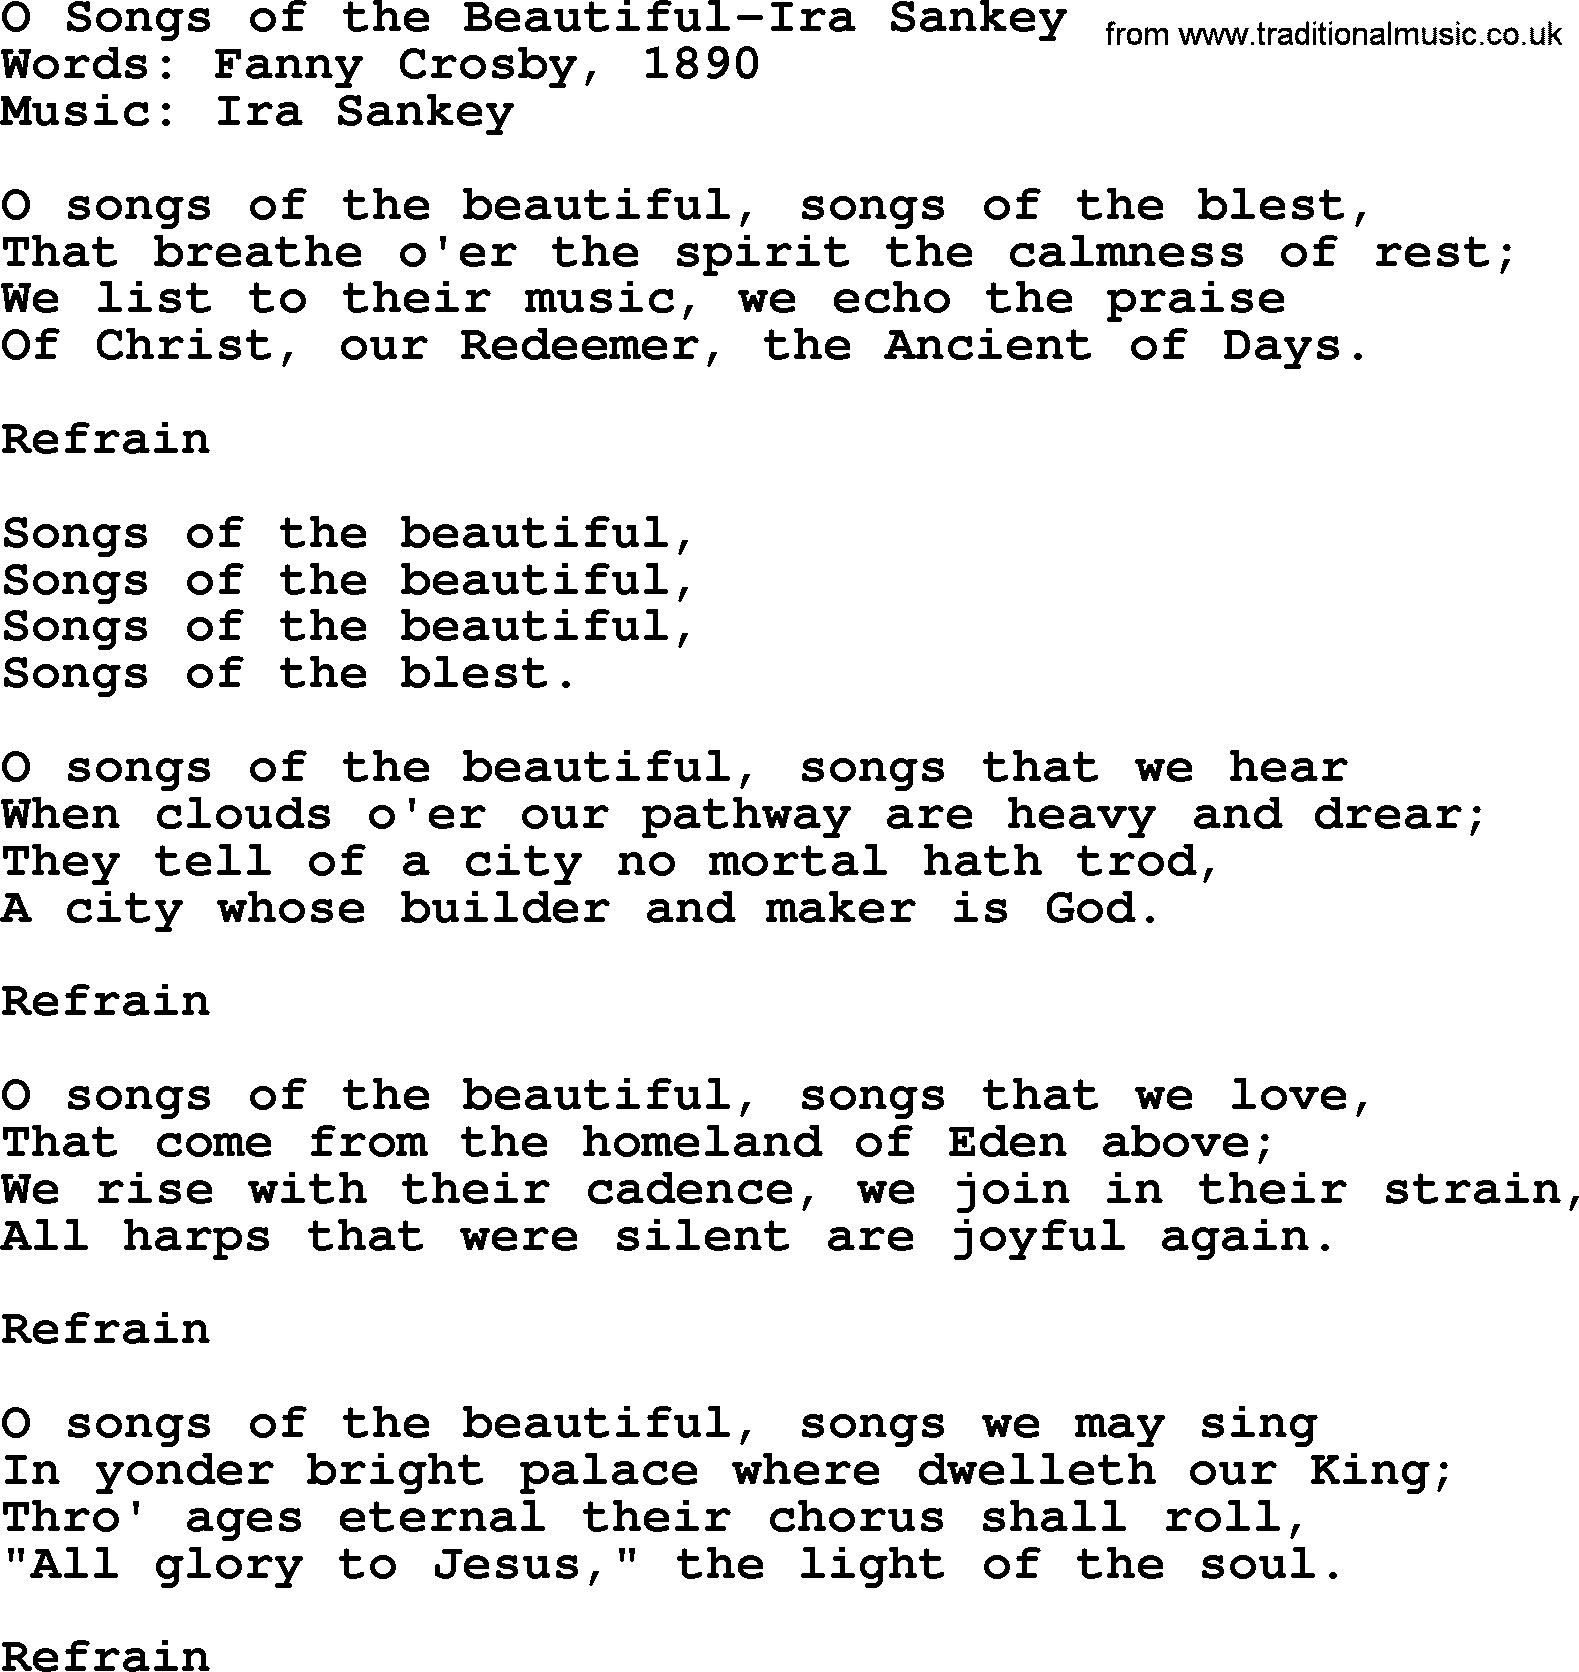 Ira Sankey hymn: O Songs of the Beautiful-Ira Sankey, lyrics